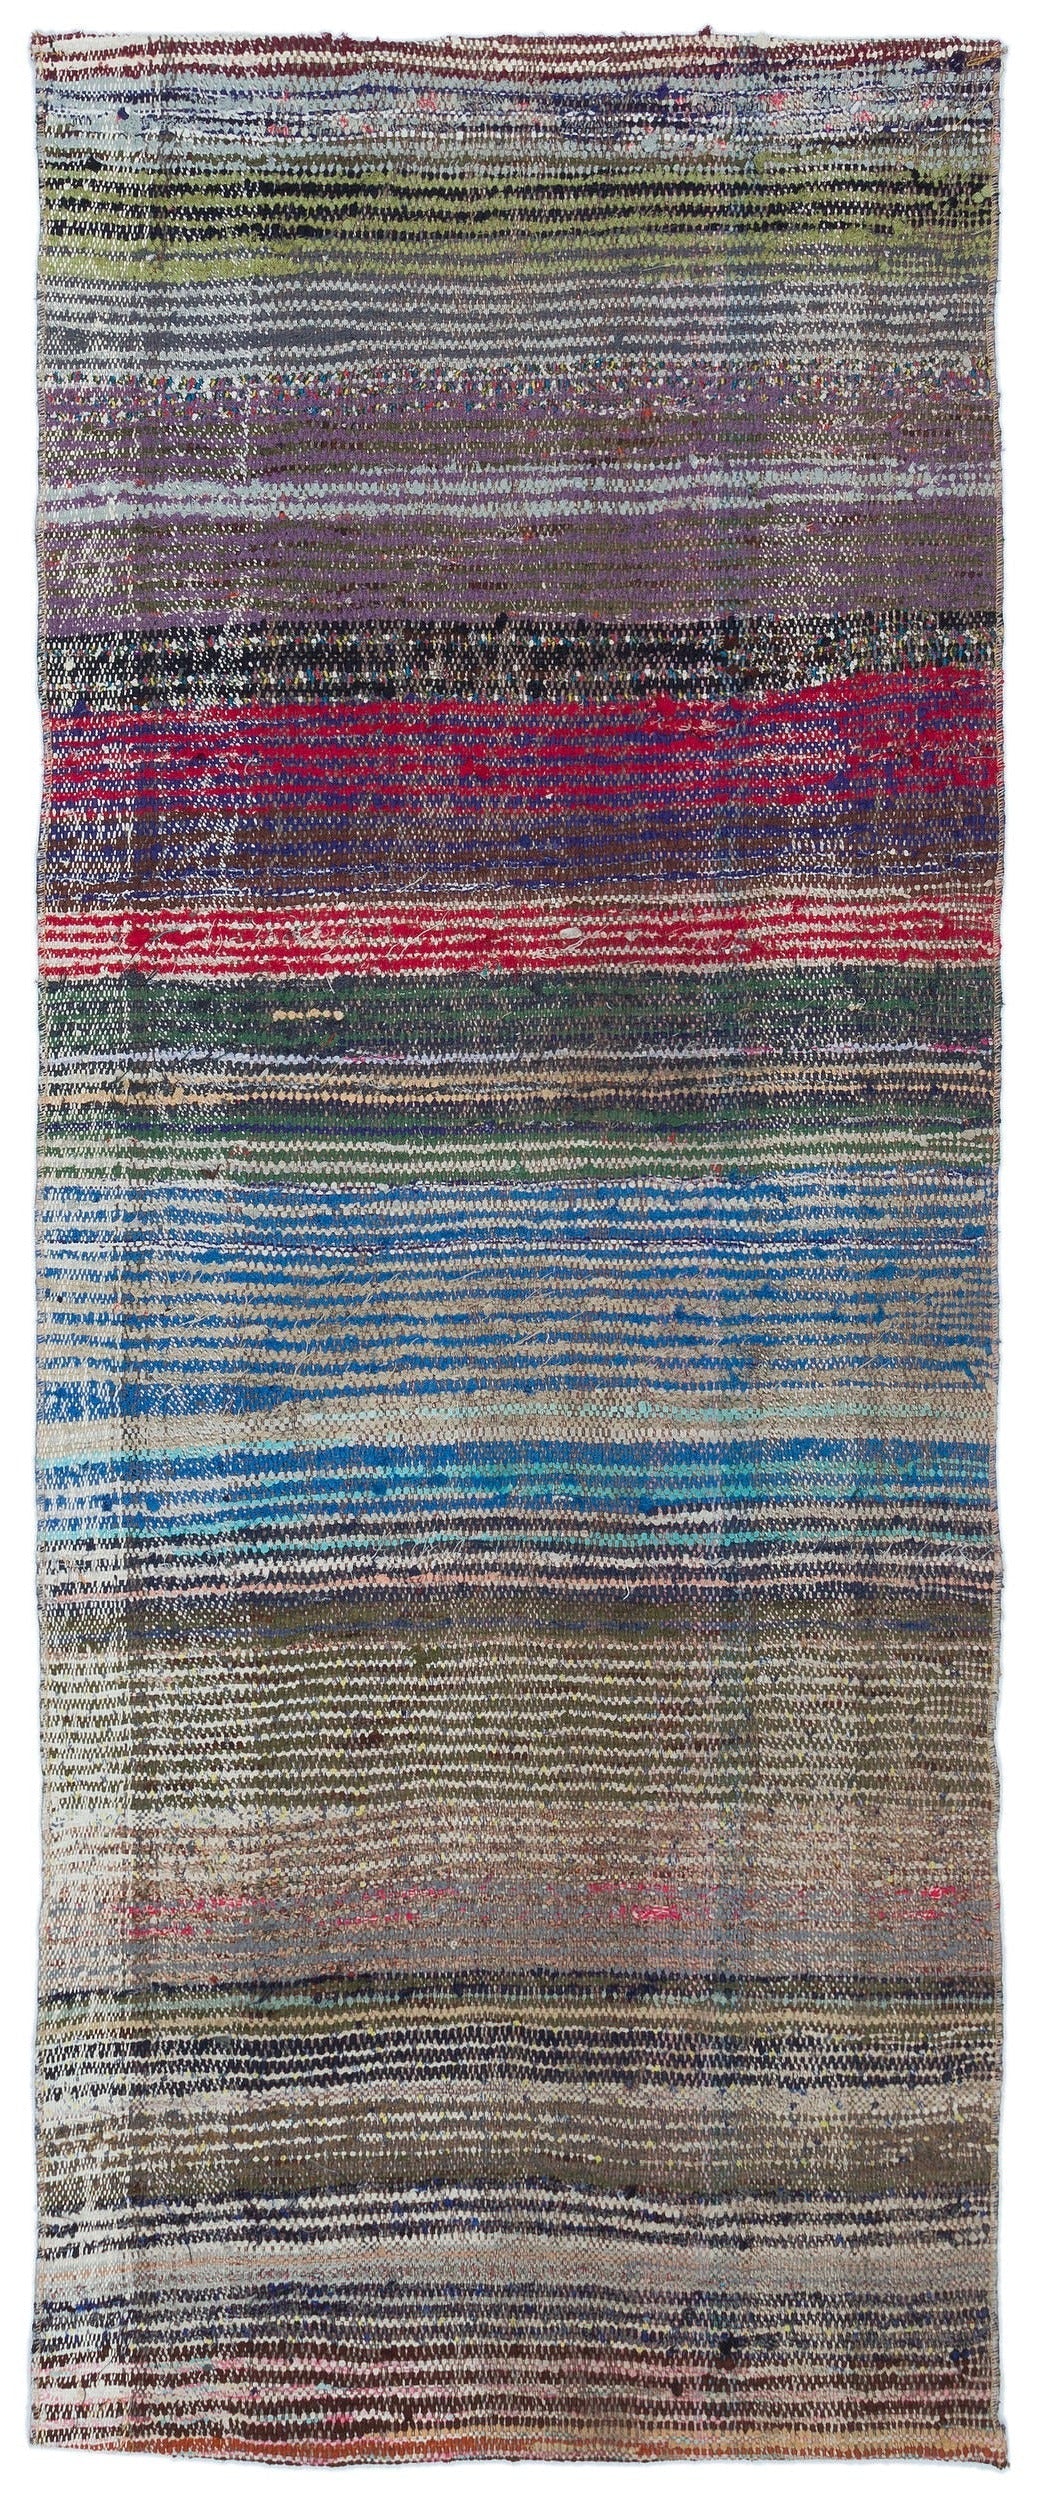 Cretan Brown Striped Wool Hand-Woven Carpet 077 x 194